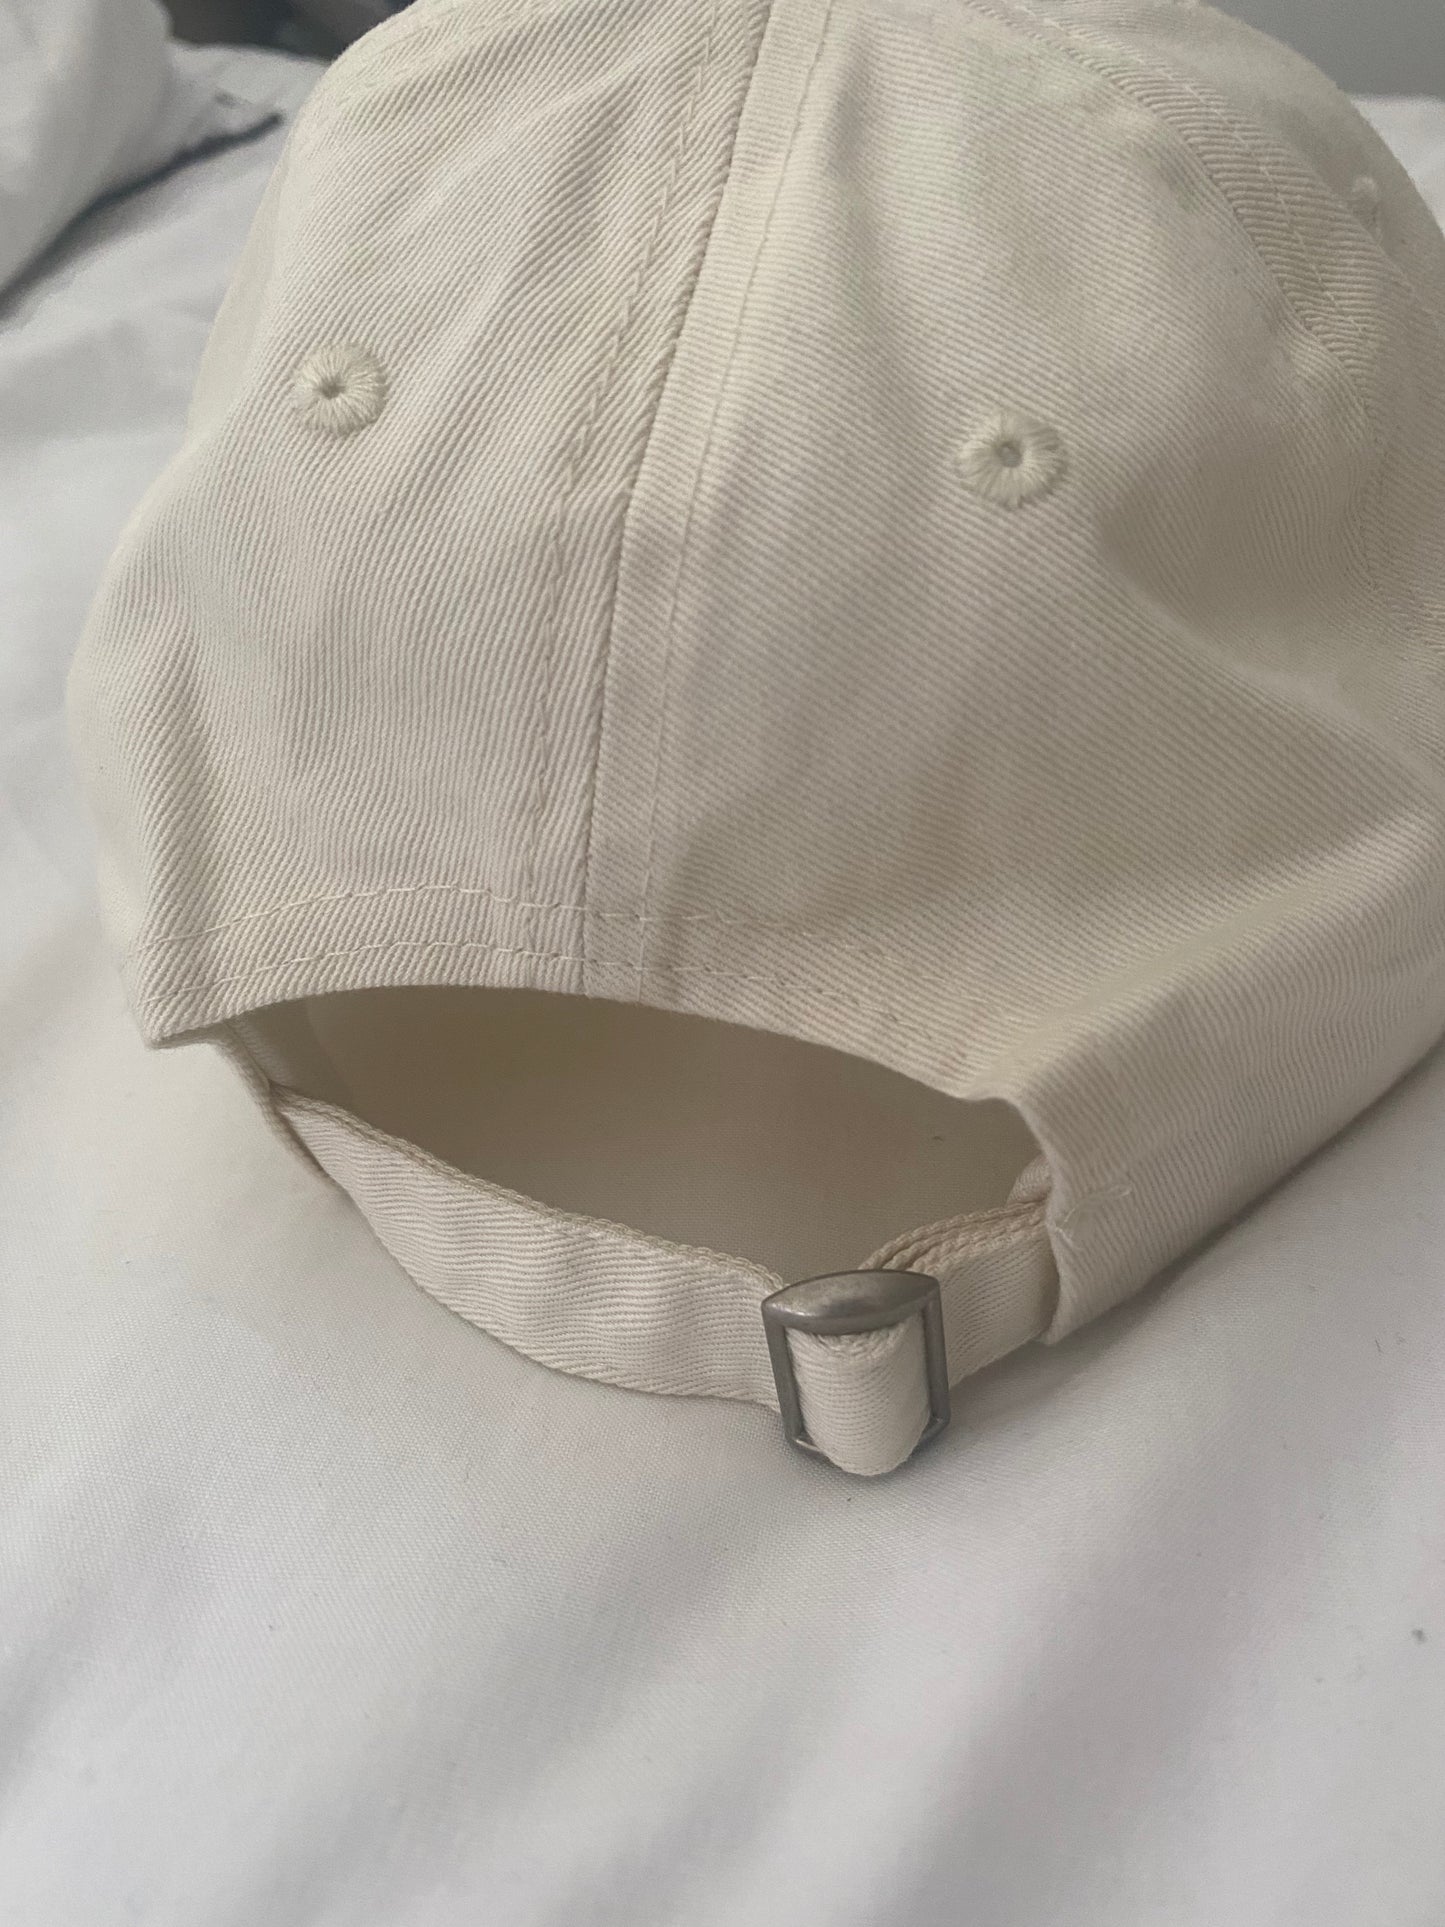 ‘Pa Lidhje’ Embroidered Baseball Cap - Beige